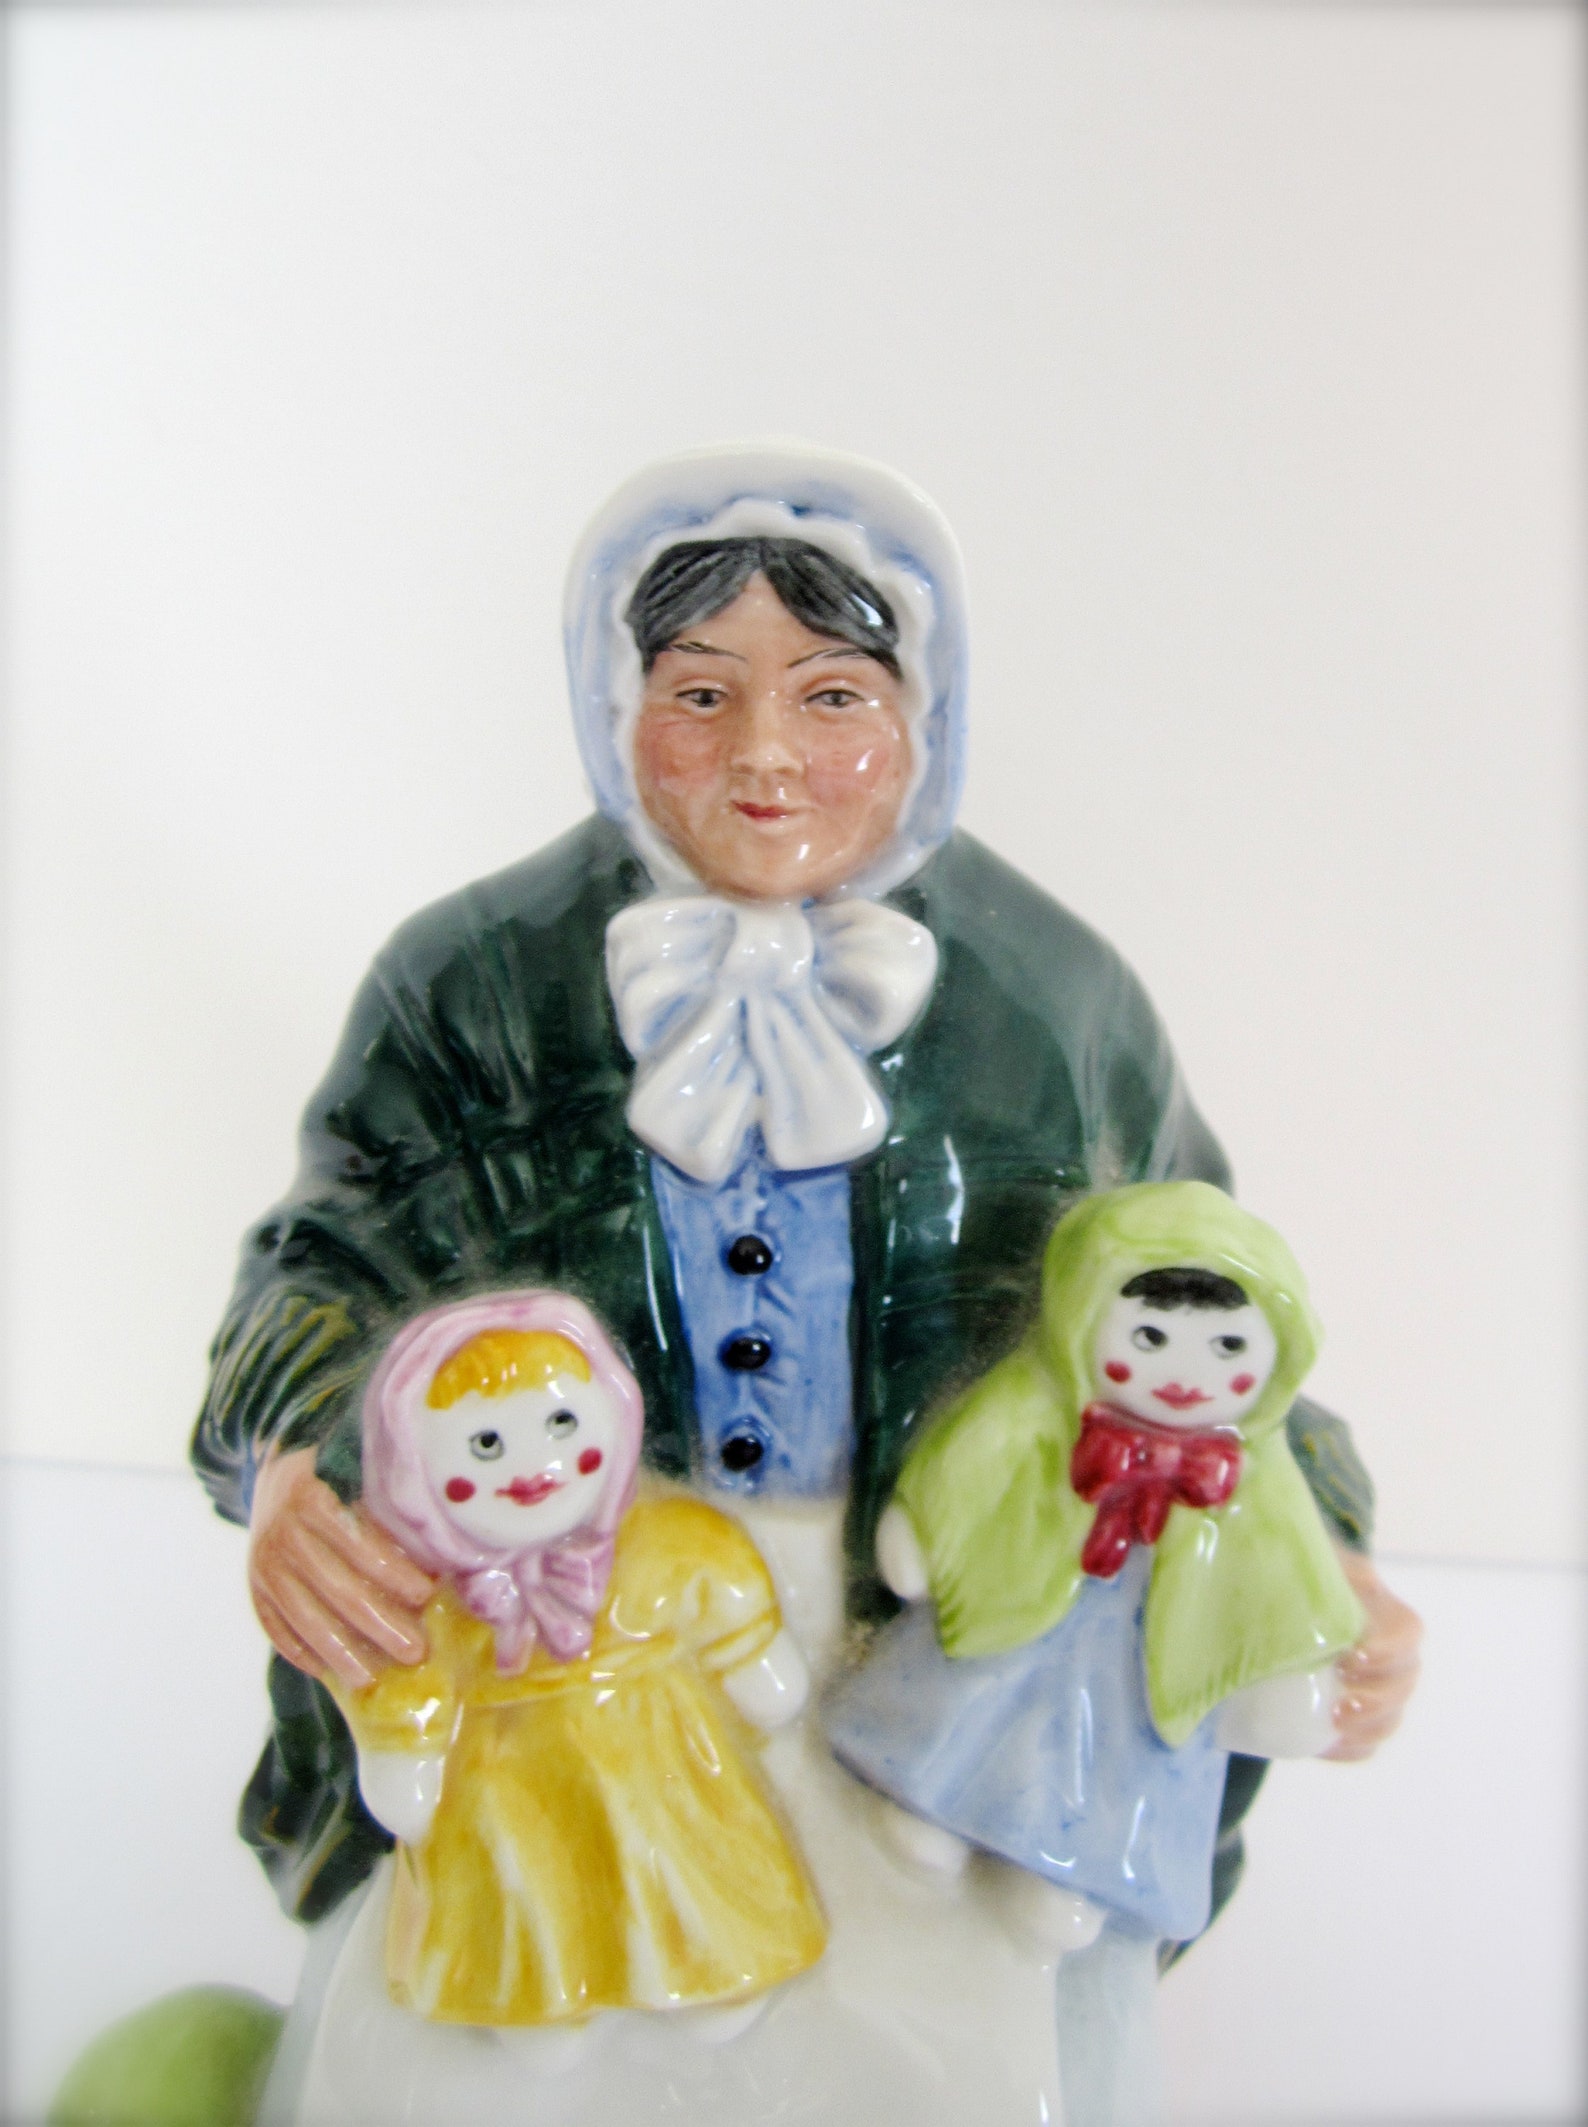 Royal Doulton The Rag Doll Seller Figurine | Etsy